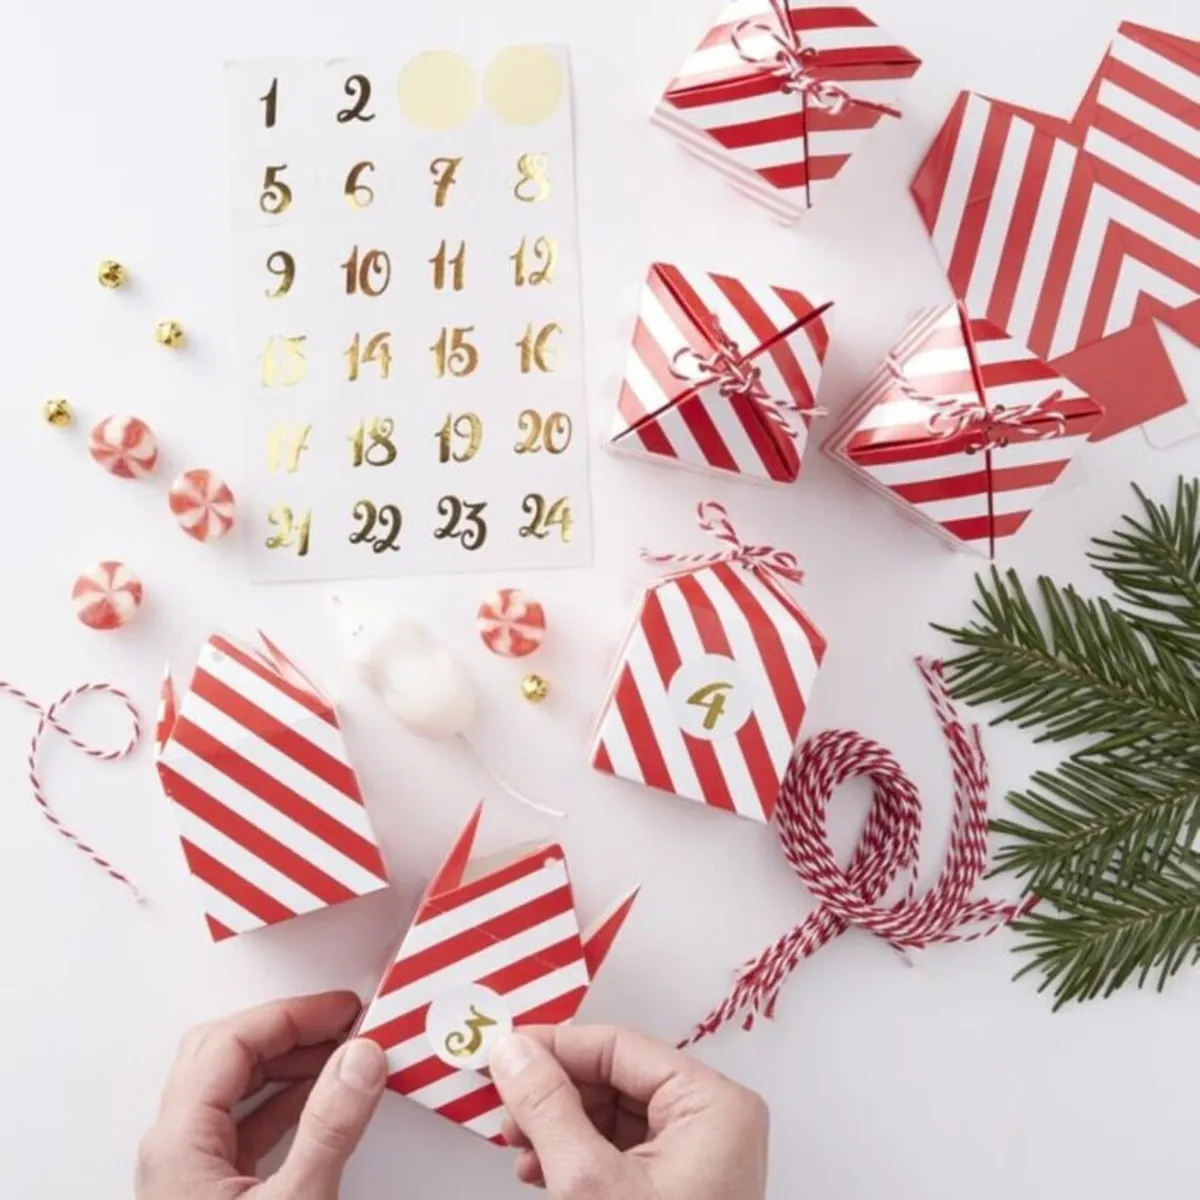 Candy cane boxes advent calendar kit